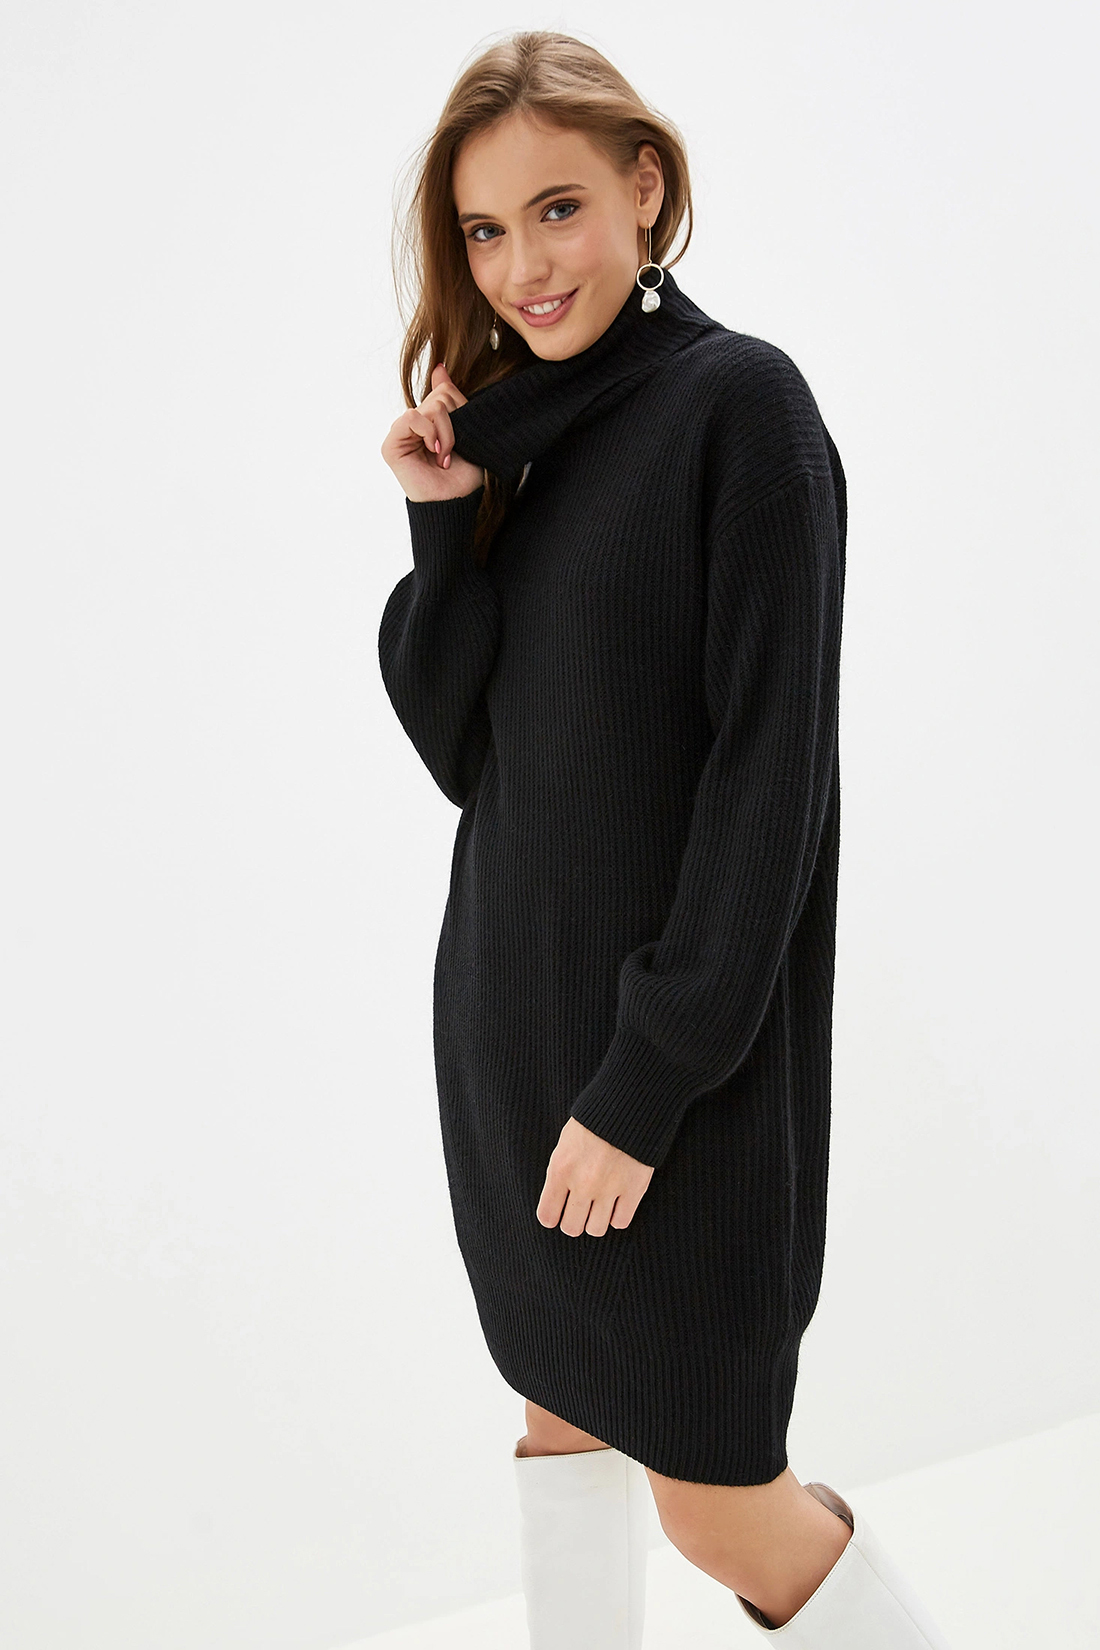 Платье-свитер с ангорой (арт. baon B459538), размер L, цвет черный Платье-свитер с ангорой (арт. baon B459538) - фото 3